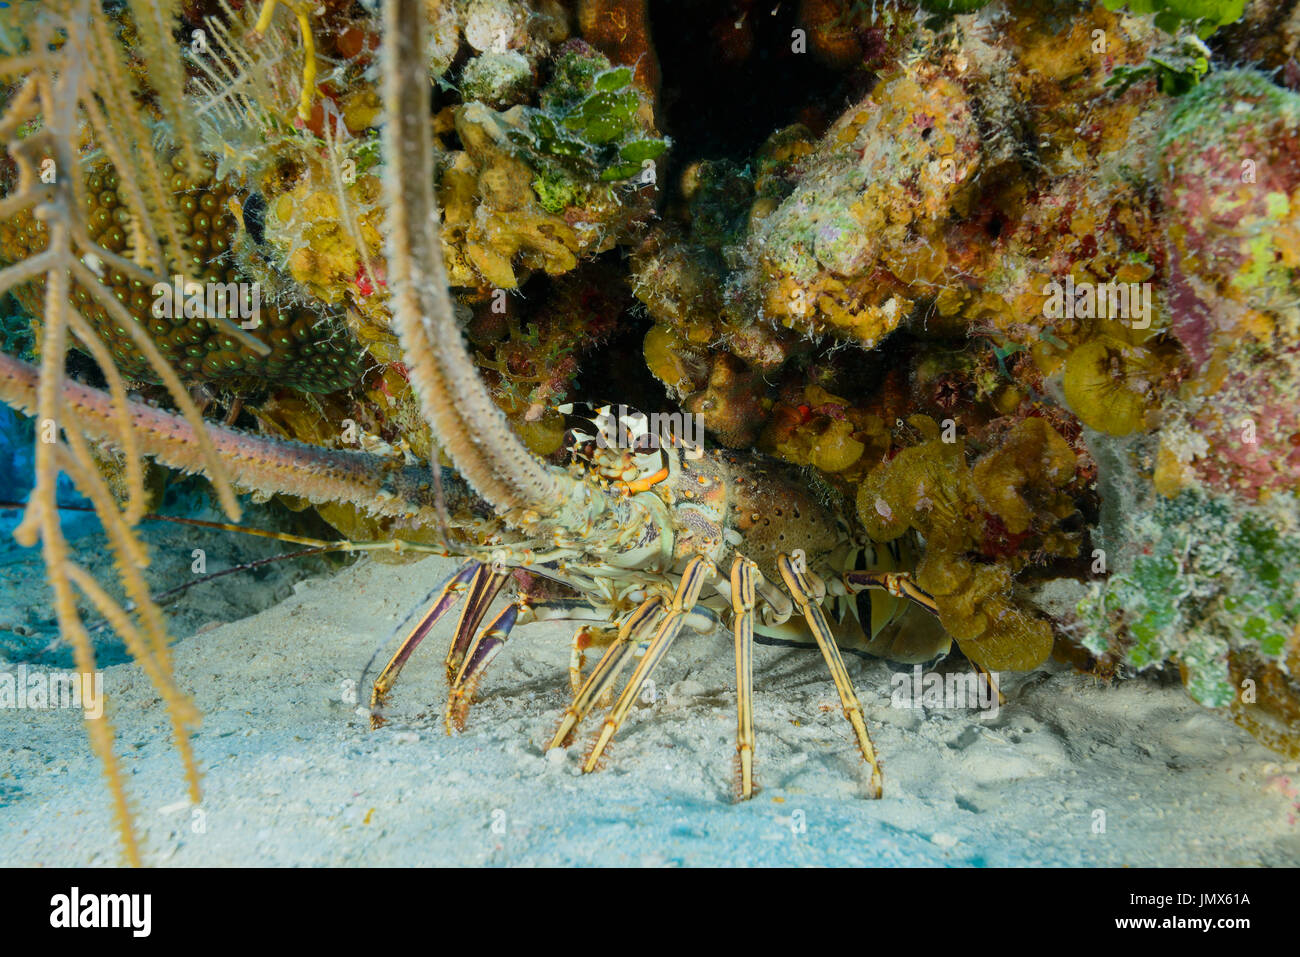 Panulirus argus, West Indian spiny lobster or Langouste, Tortola Island, British Virgin Islands, Caribbean Sea Stock Photo